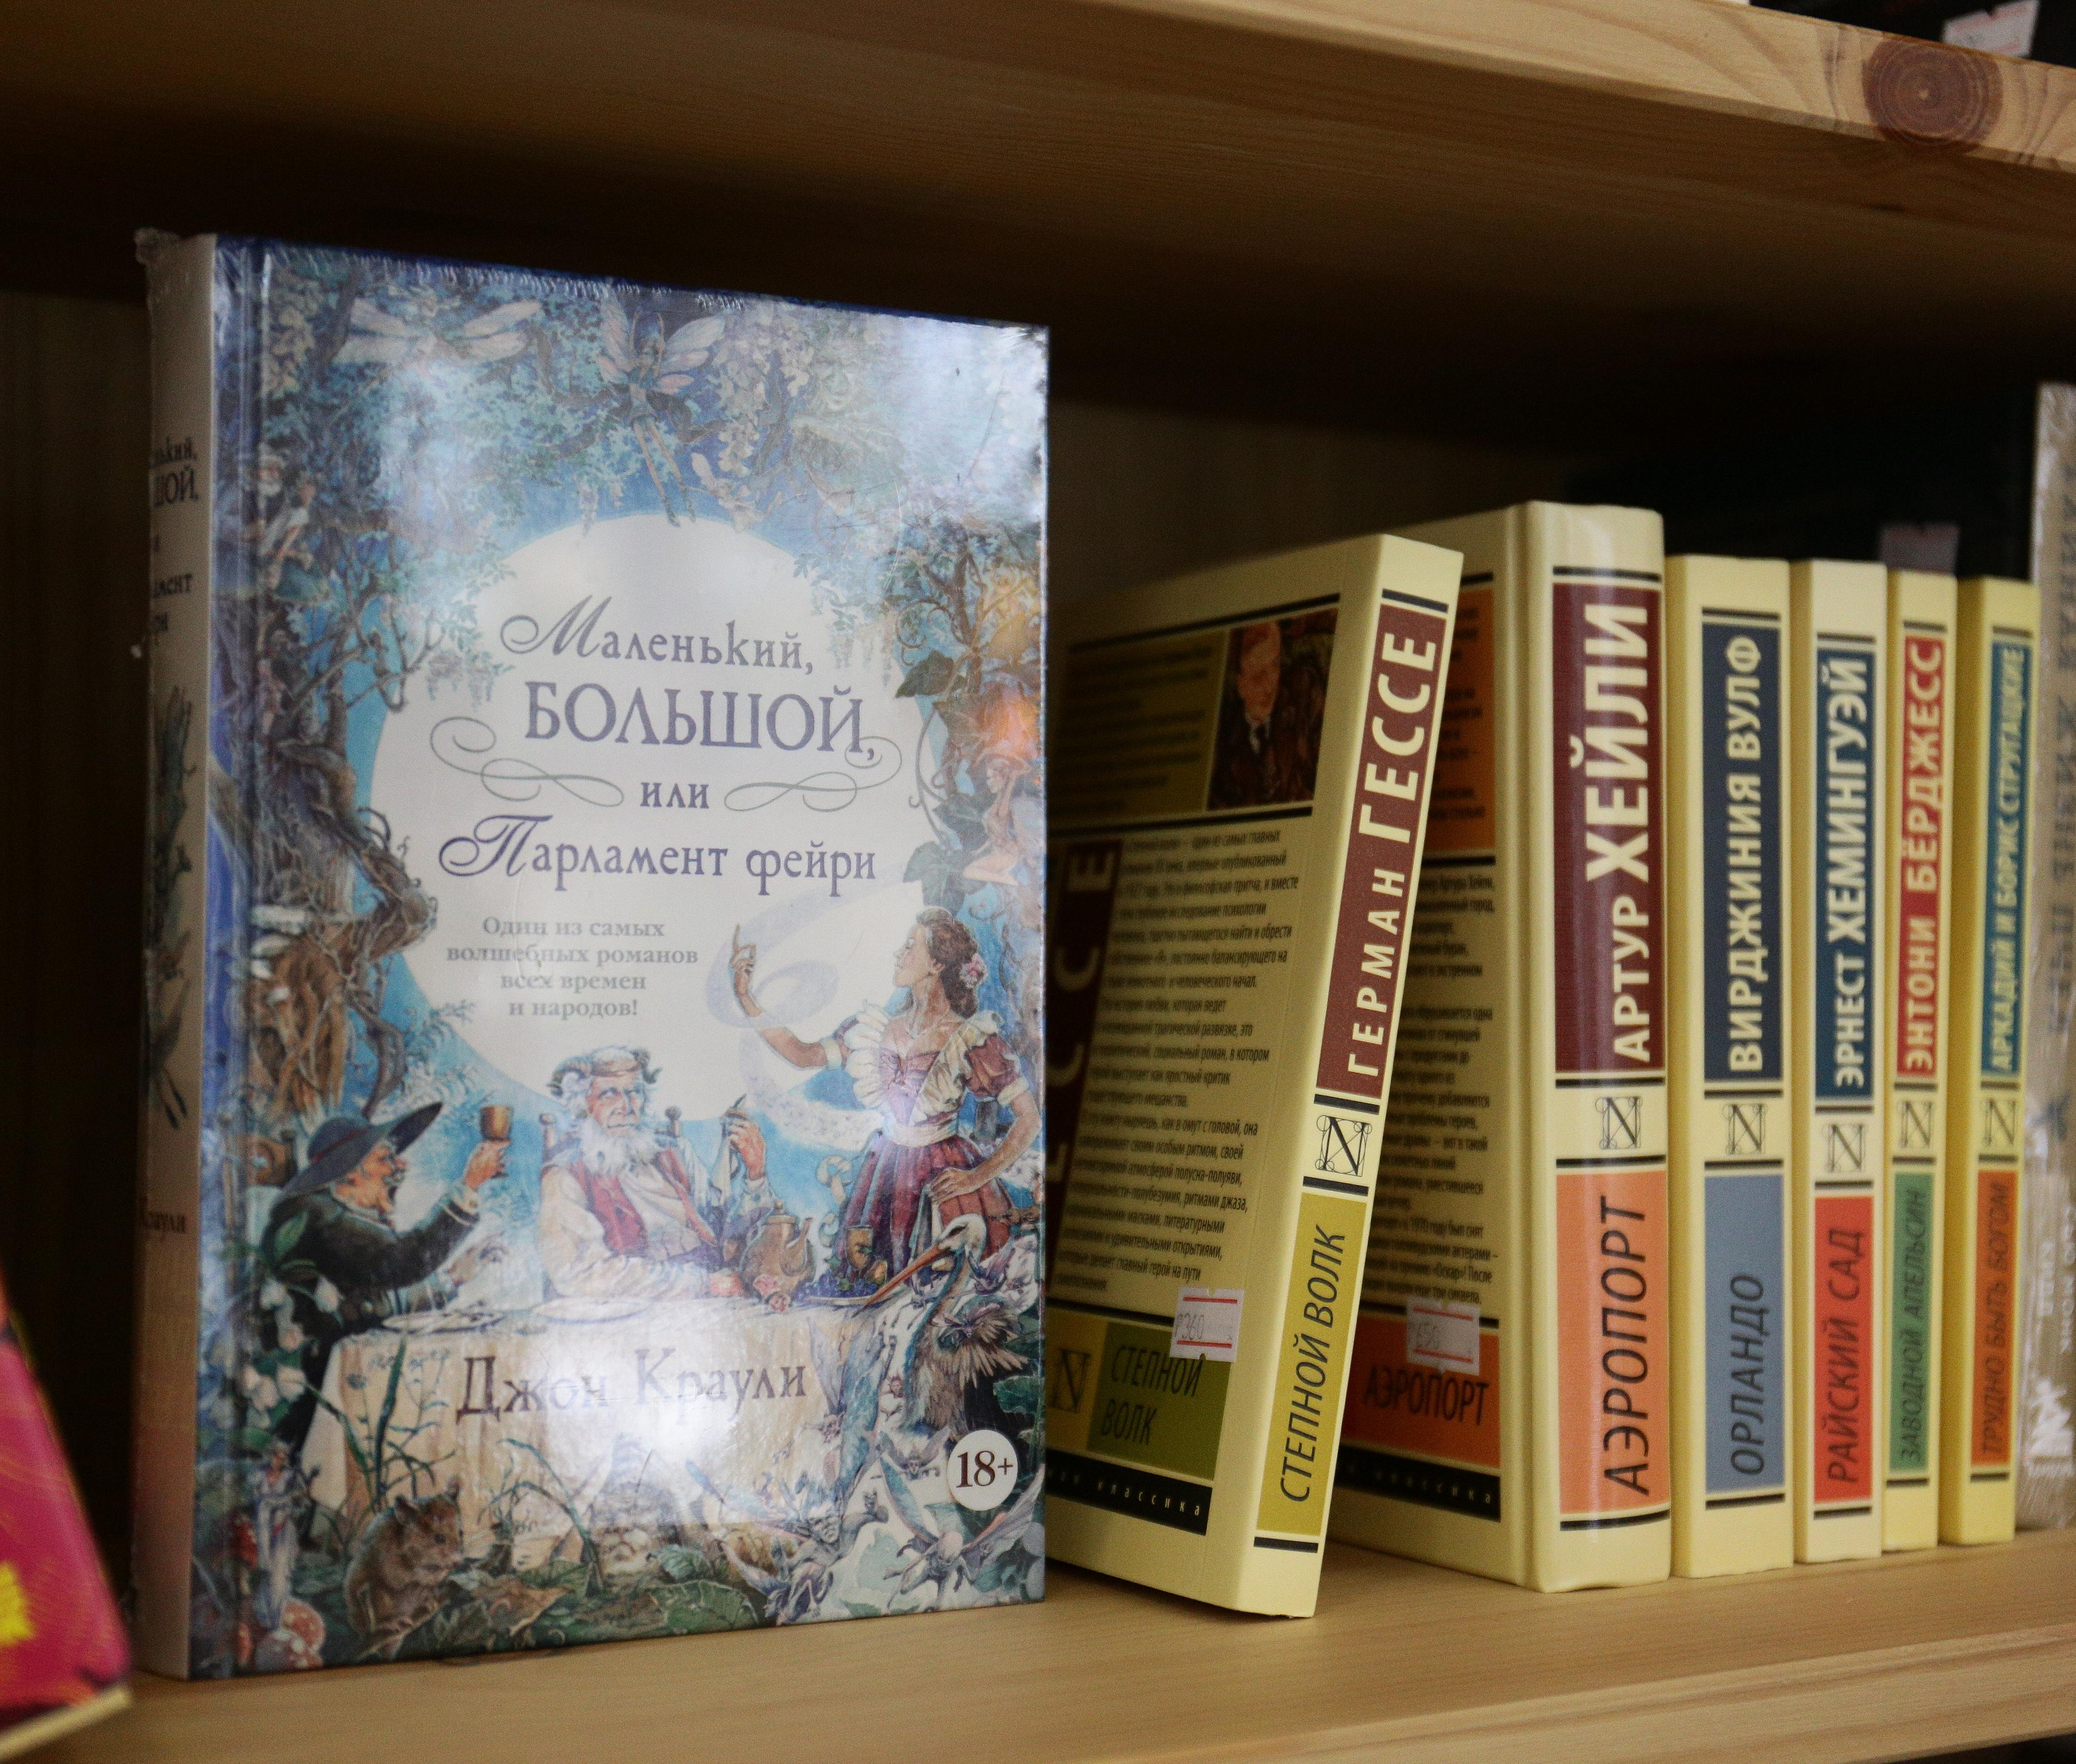 Продавец книг Вероника Украинцева: «Дети залипают на виммельбухи»